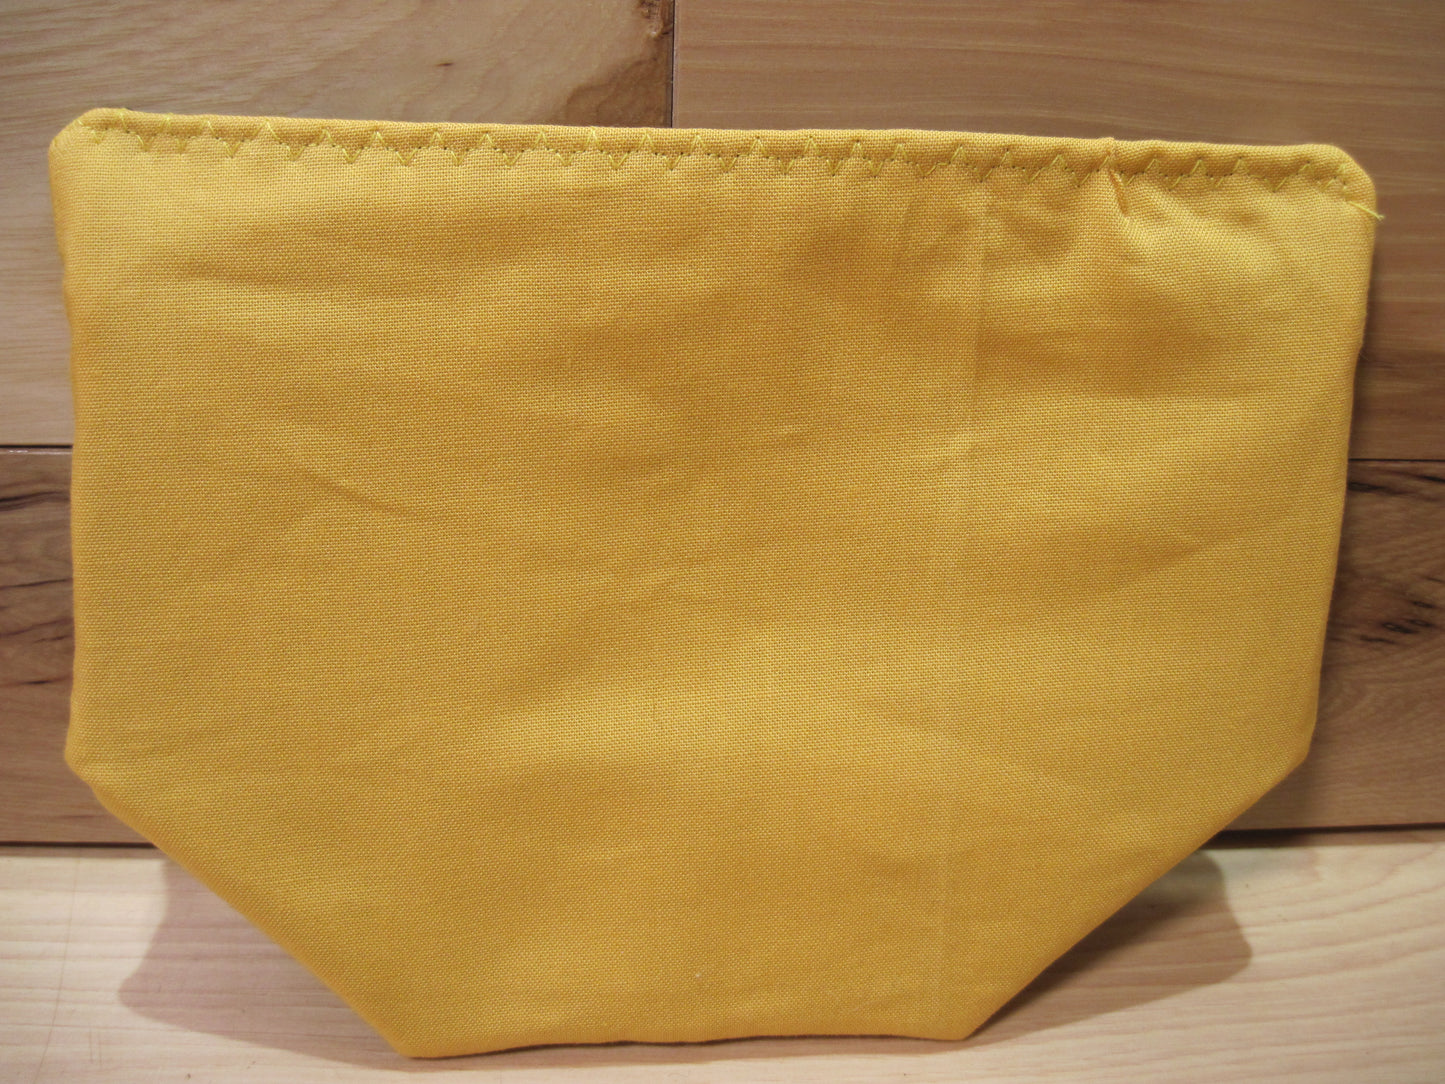 Notion's Bag Star Wars w/ yellow